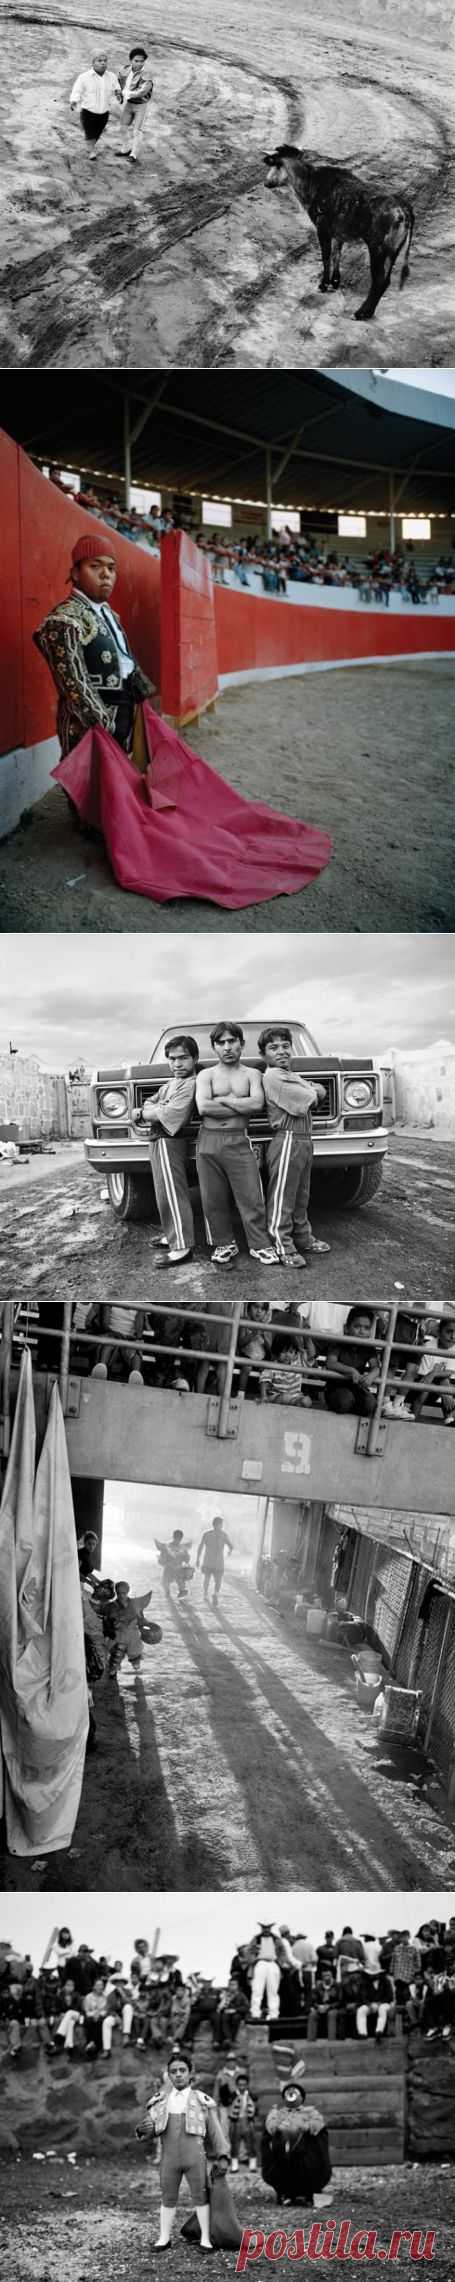 ФотоТелеграф » Мексиканские карлики-тореадоры